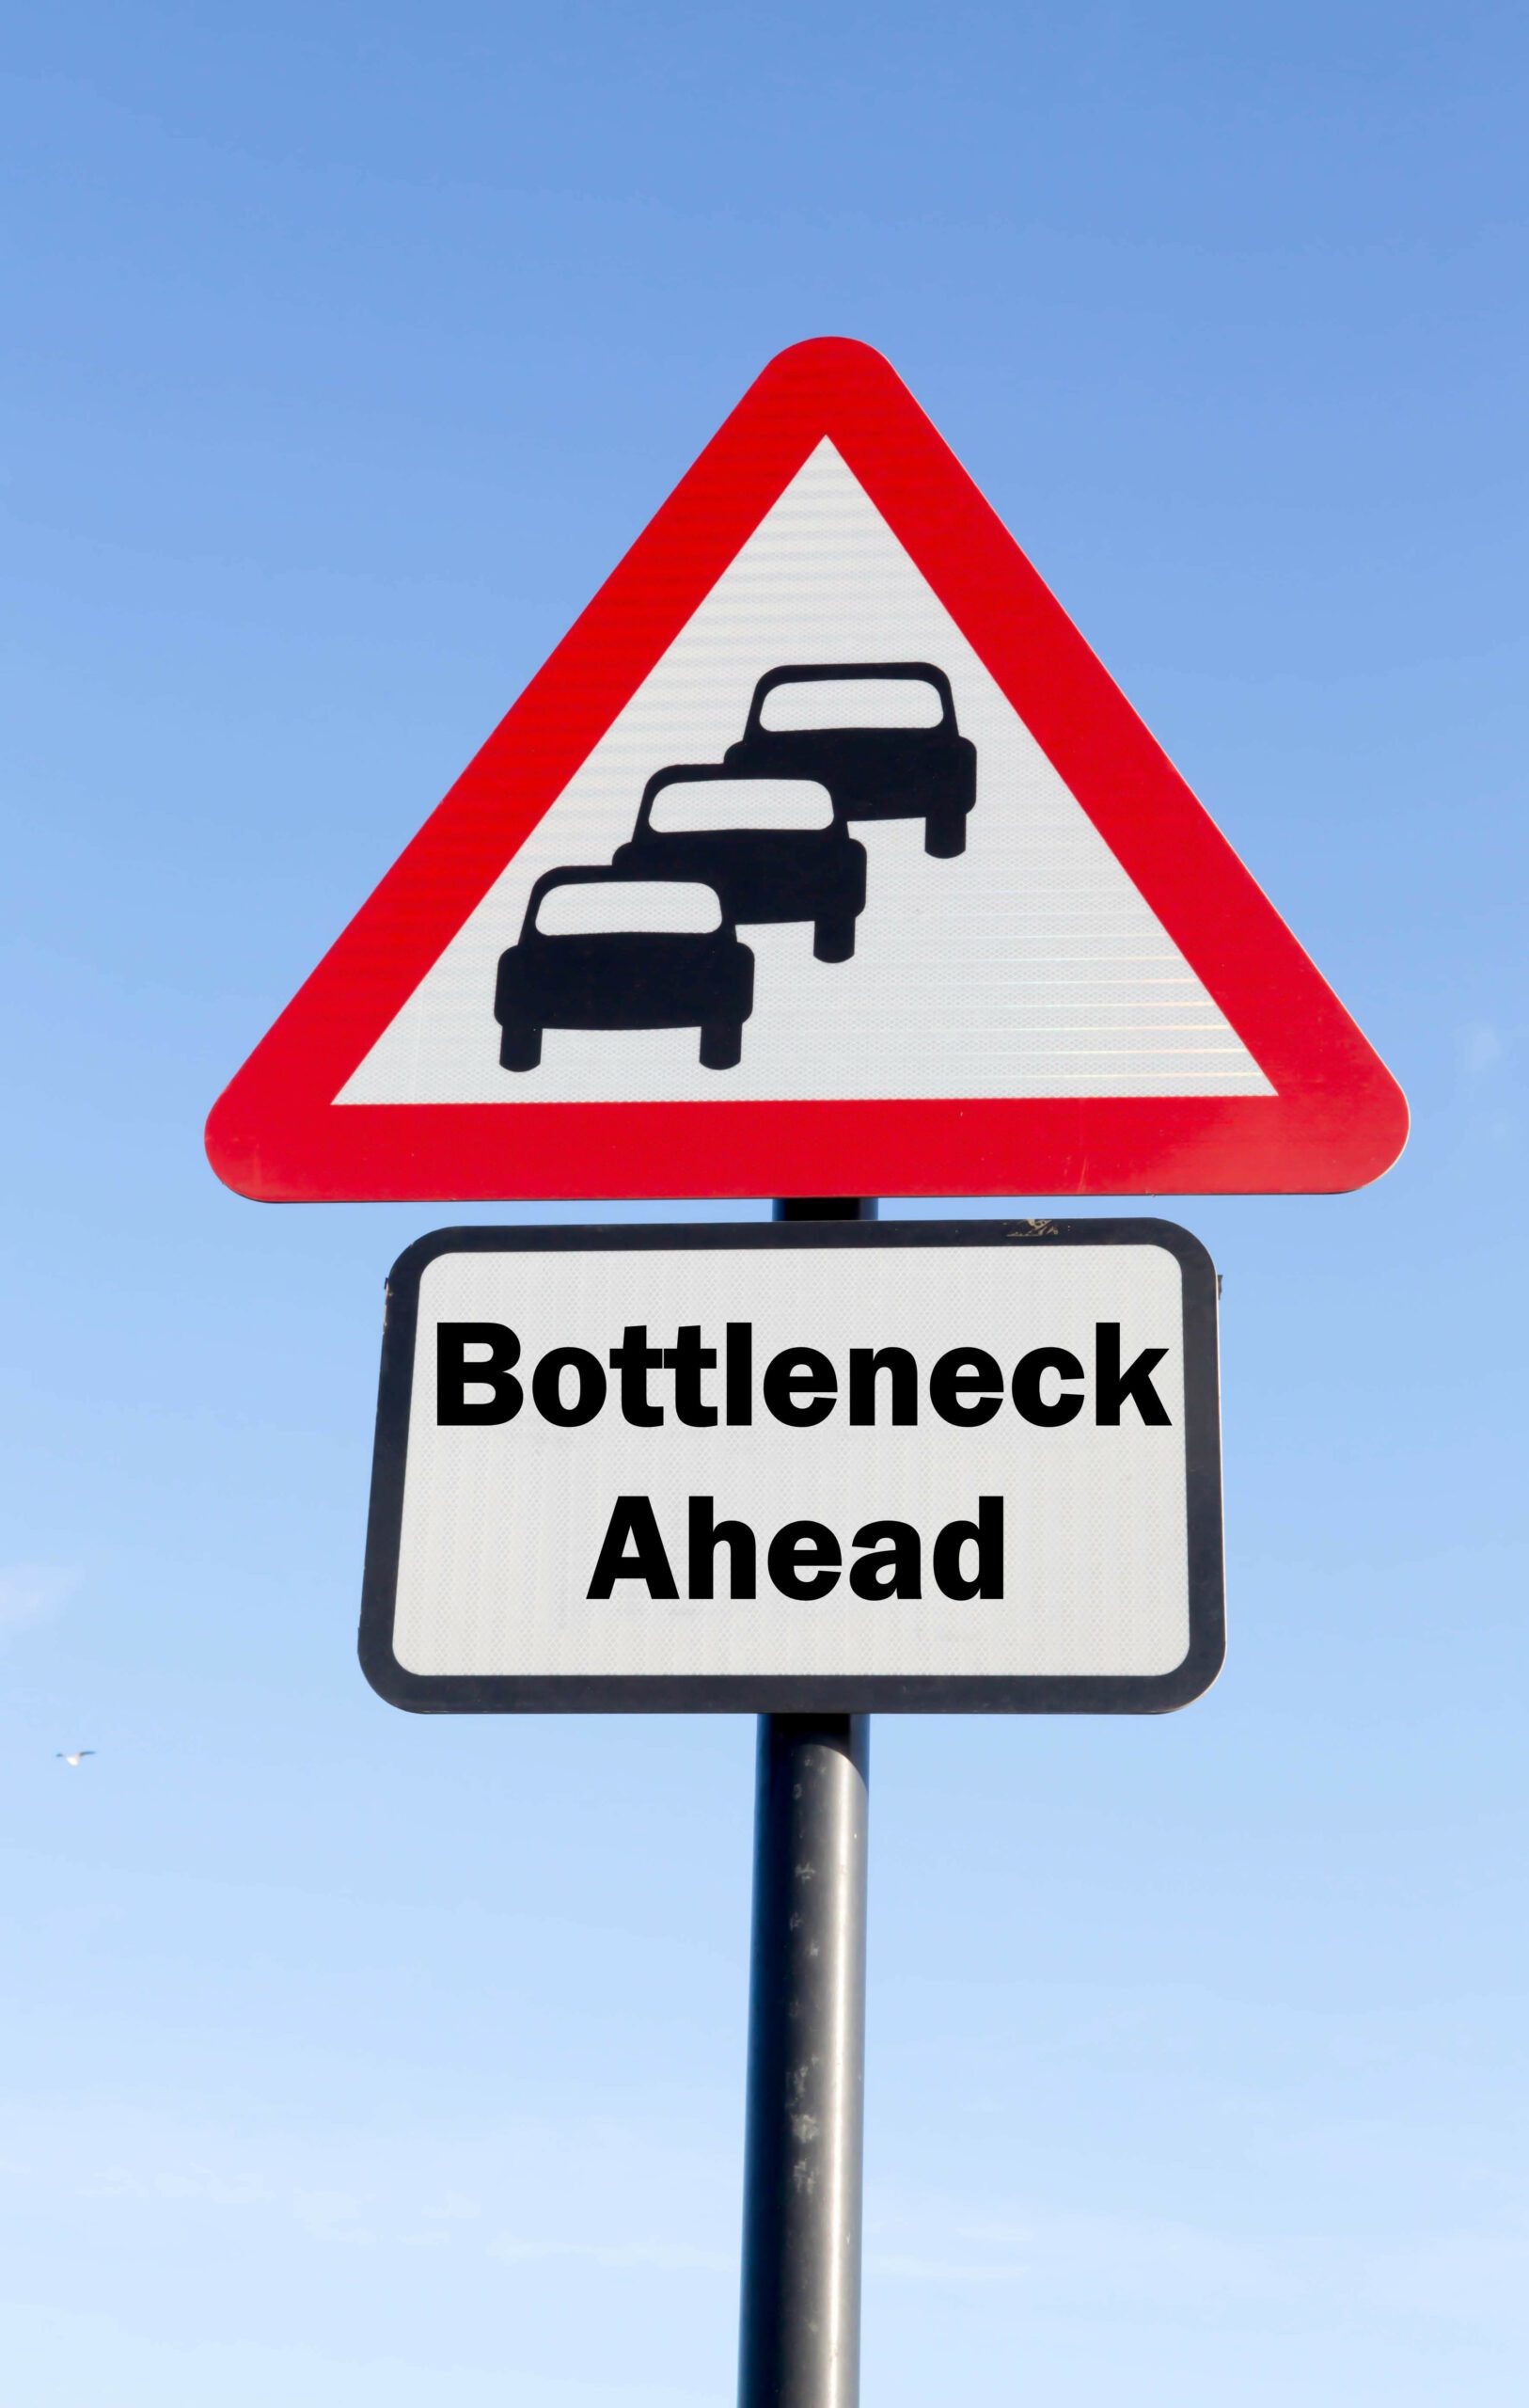 A street sign warning drivers of a traffic bottleneck